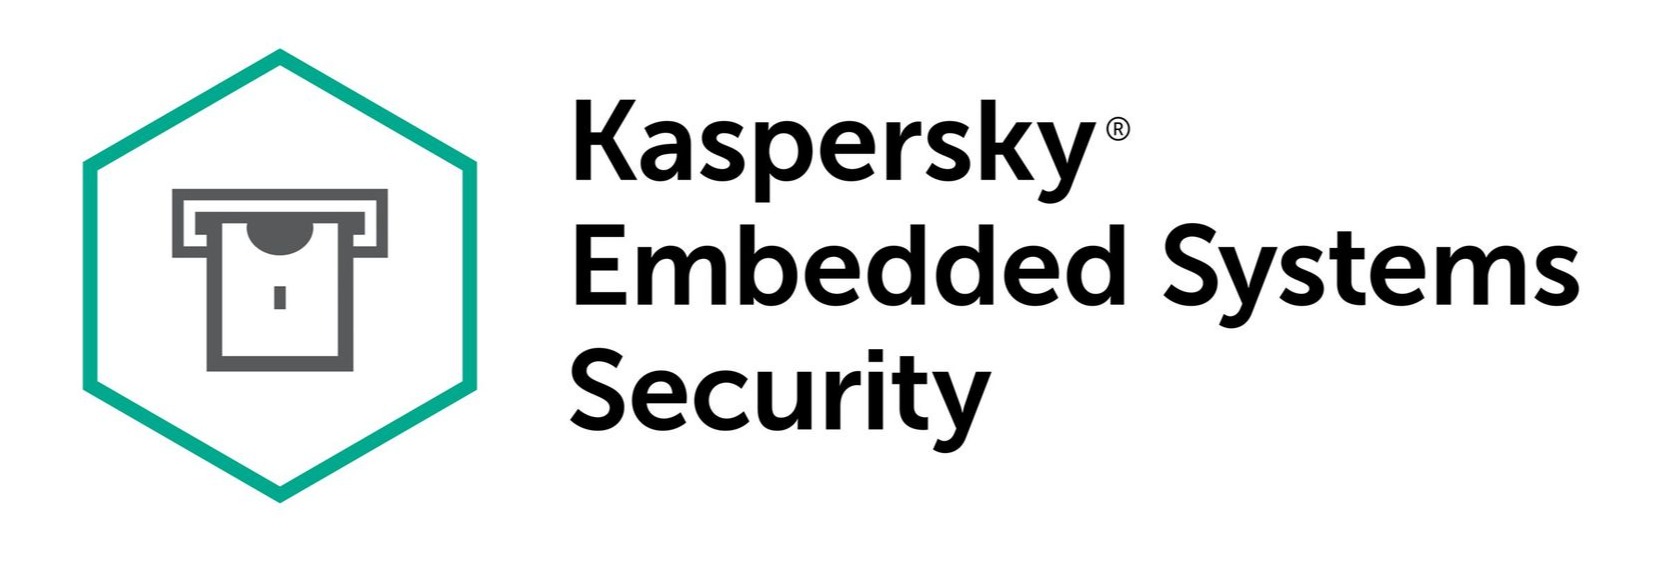 kaspersky embedded security kaspersky cloud kaspersky security cloud antivirus kaspersky kaspersky total security kaspersky internet security kaspersky antivirus kaspersky